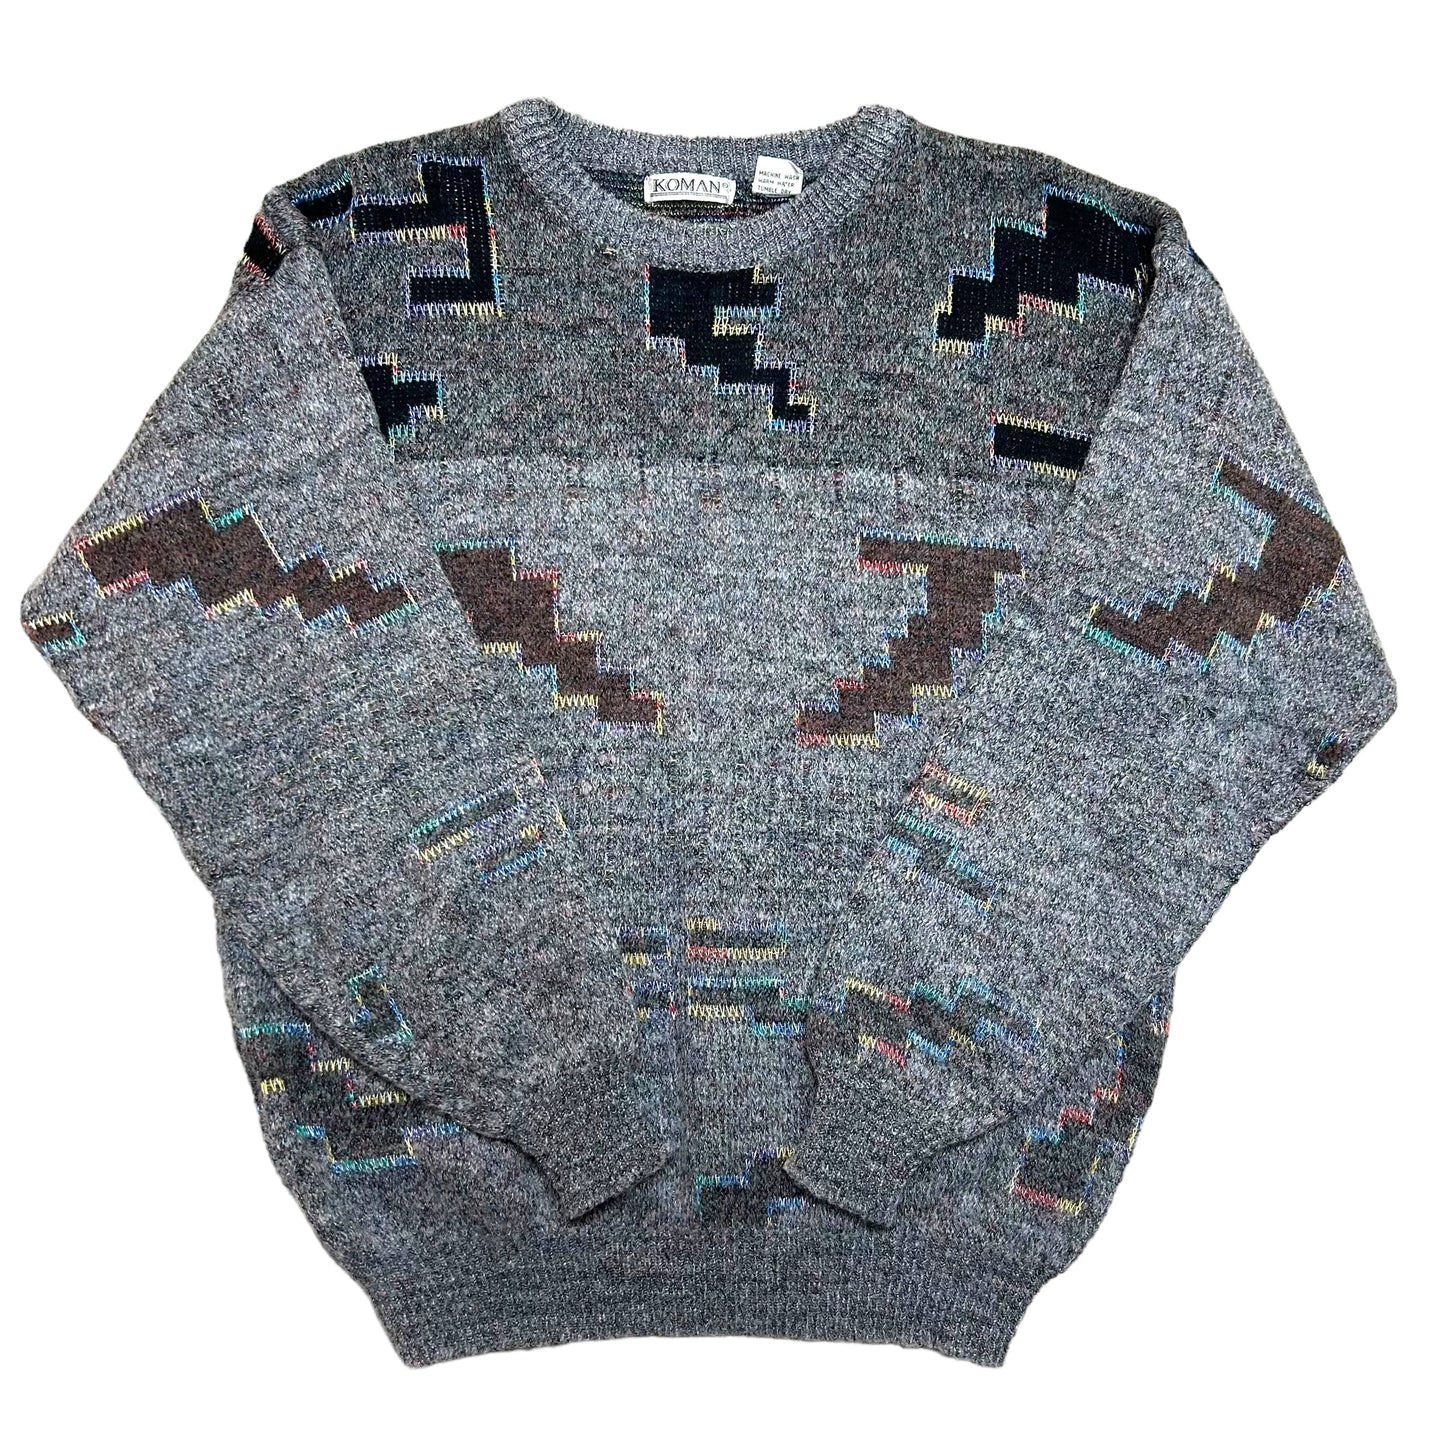 Vintage 1990s "Koman" Geometric Design Grey/Multicolor Knit Sweater - Size Large (Fits Medium)